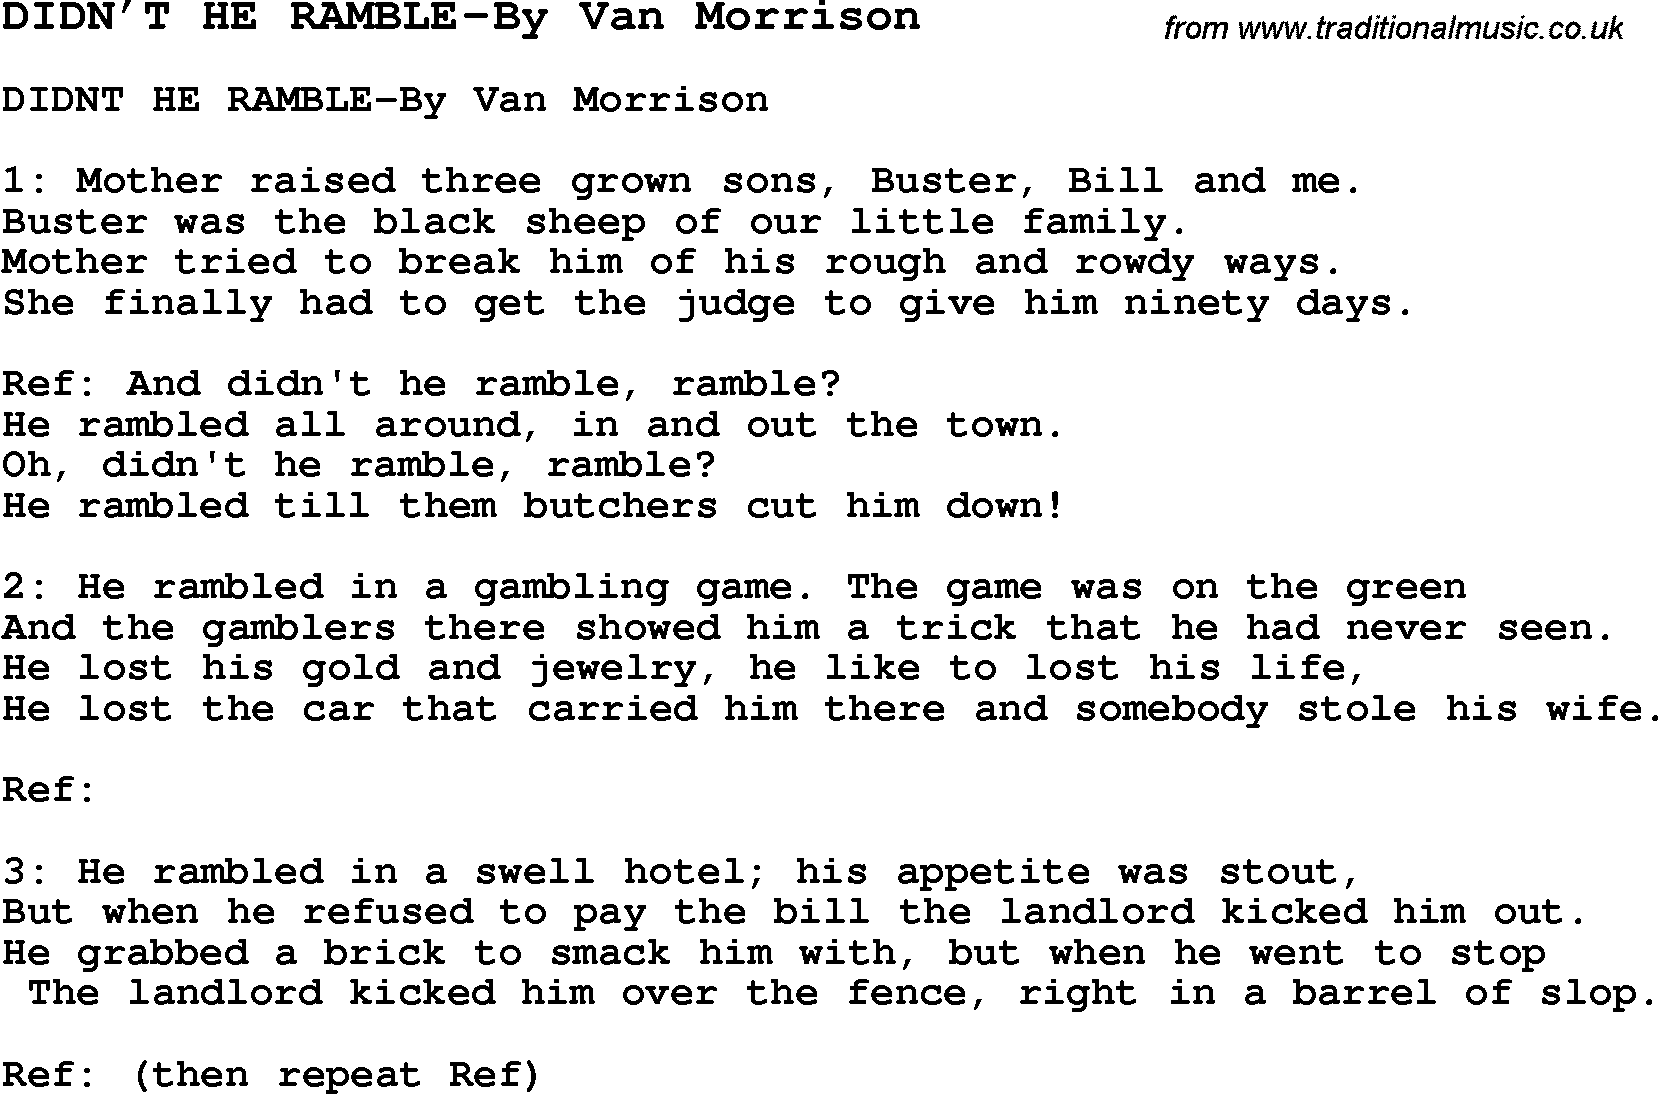 Skiffle Song Lyrics for Didn’t He Ramble-By Van Morrison.